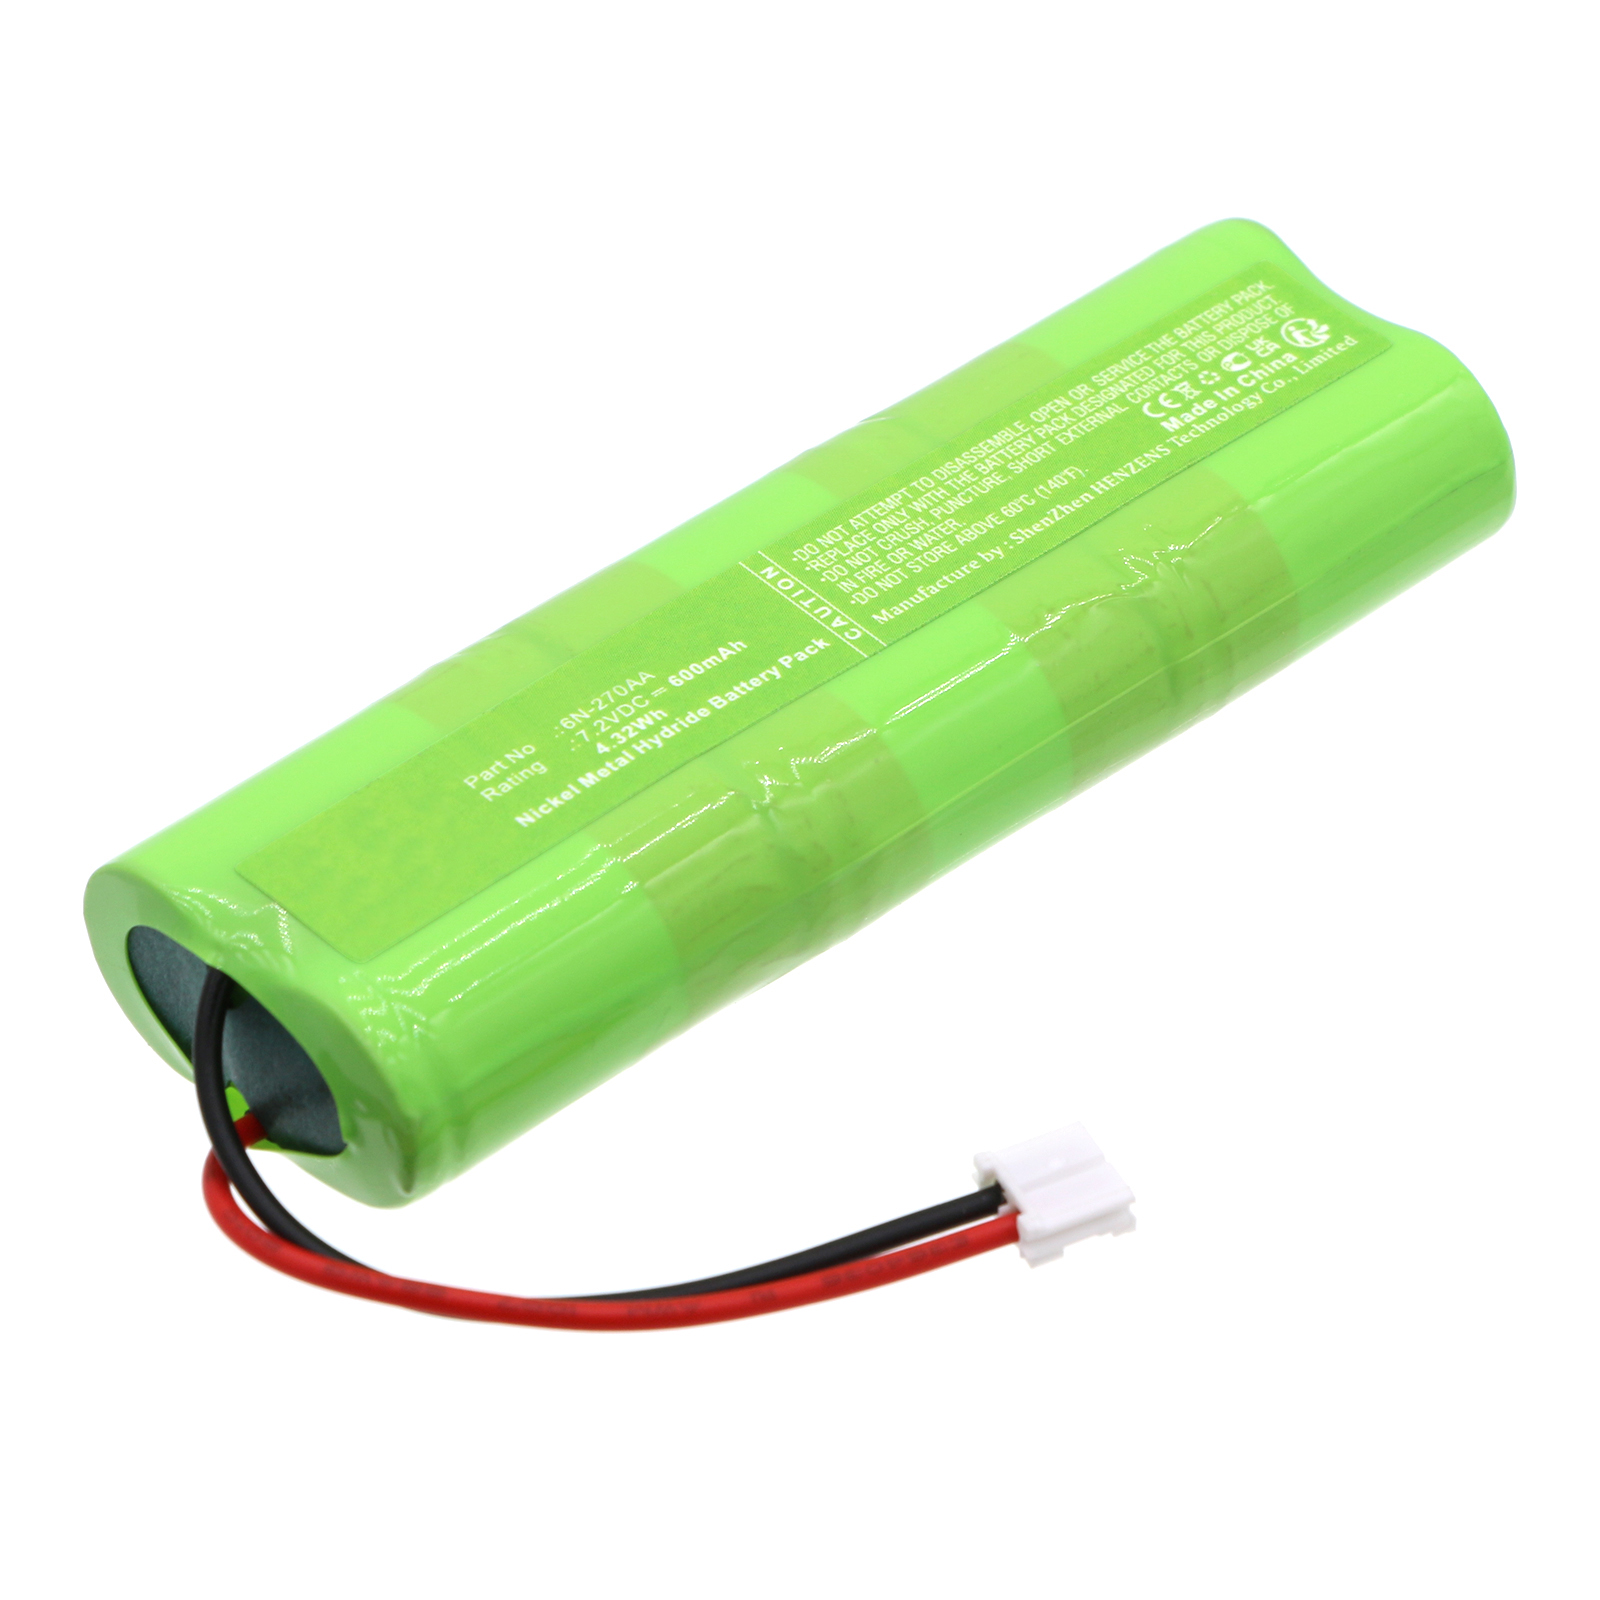 Synergy Digital Remote Control Battery, Compatible with Telenot 6N-270AA Remote Control Battery (Ni-MH, 7.2V, 600mAh)